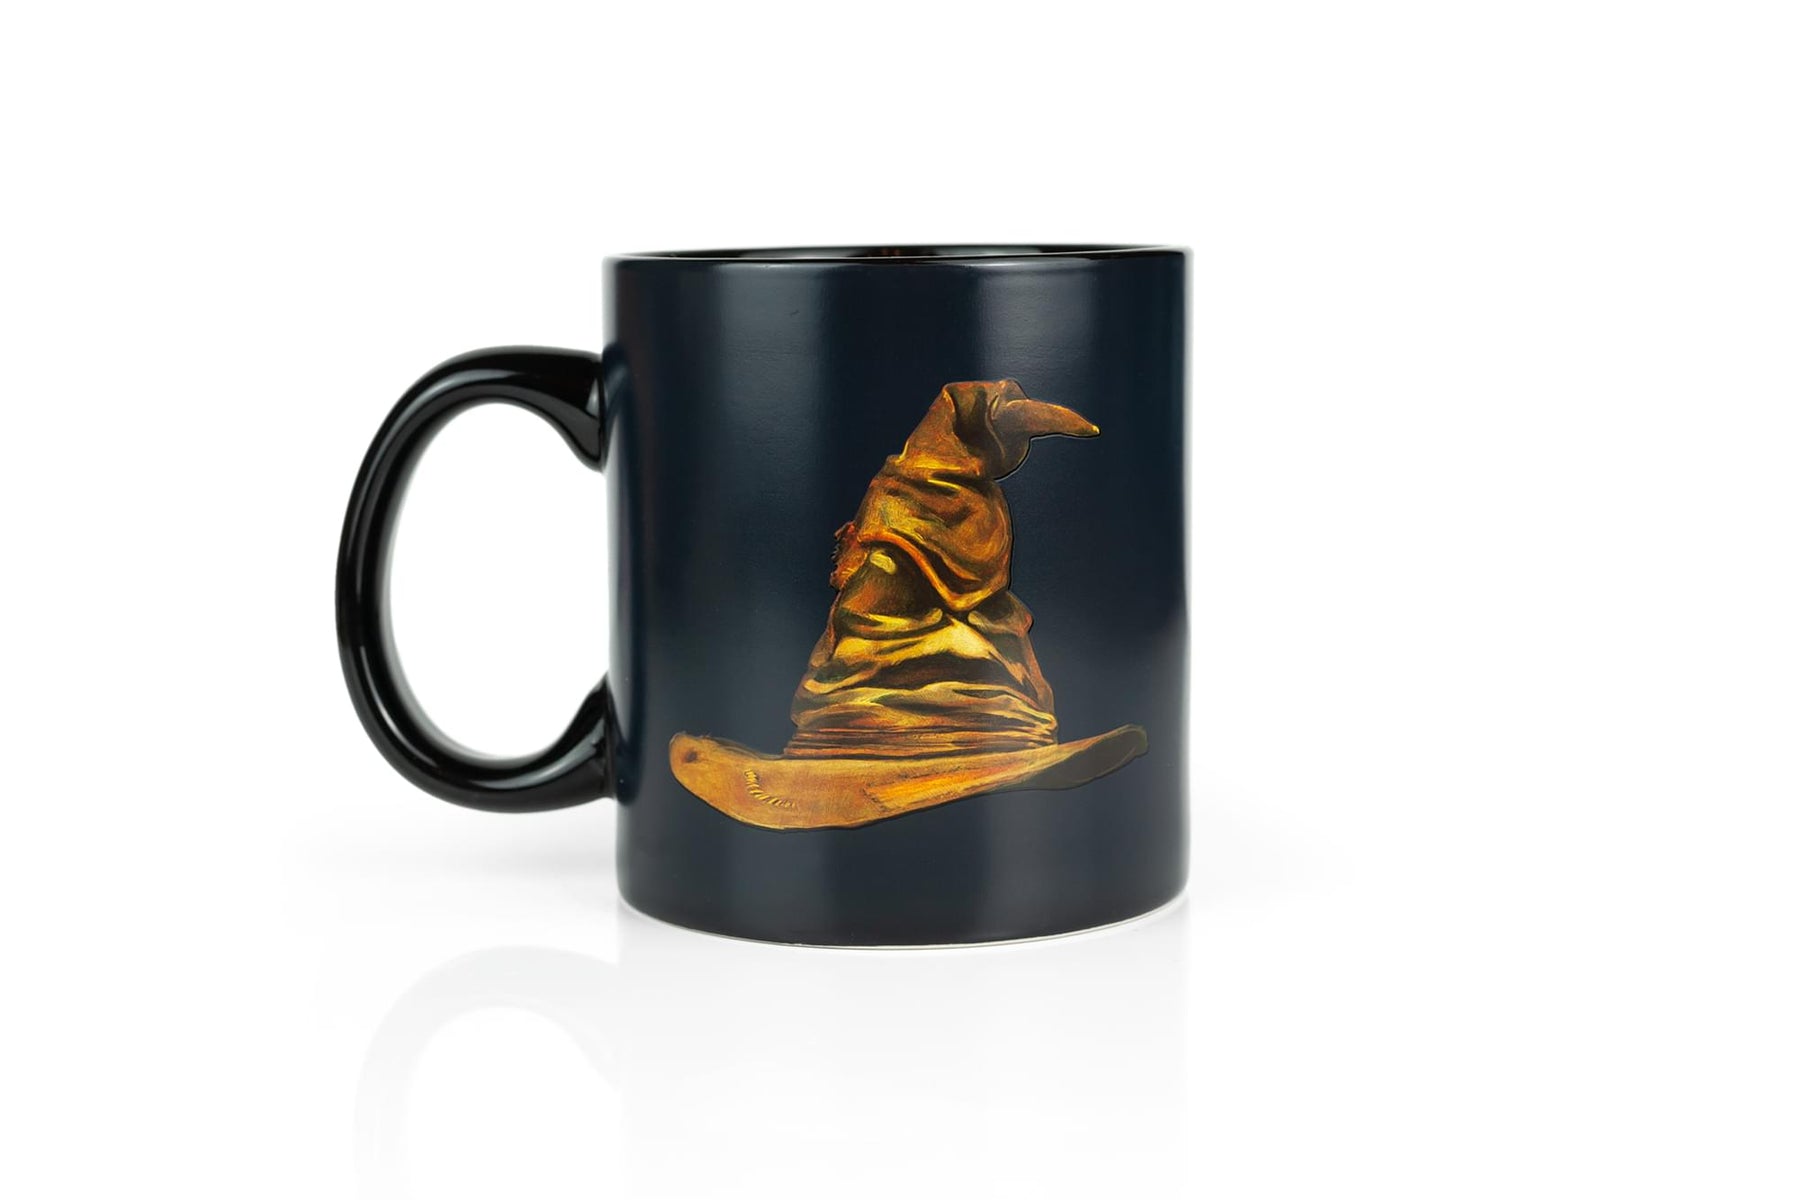 Seven20 Star Wars The Force Awakens - 20oz Heat-Reveal Ceramic Mug